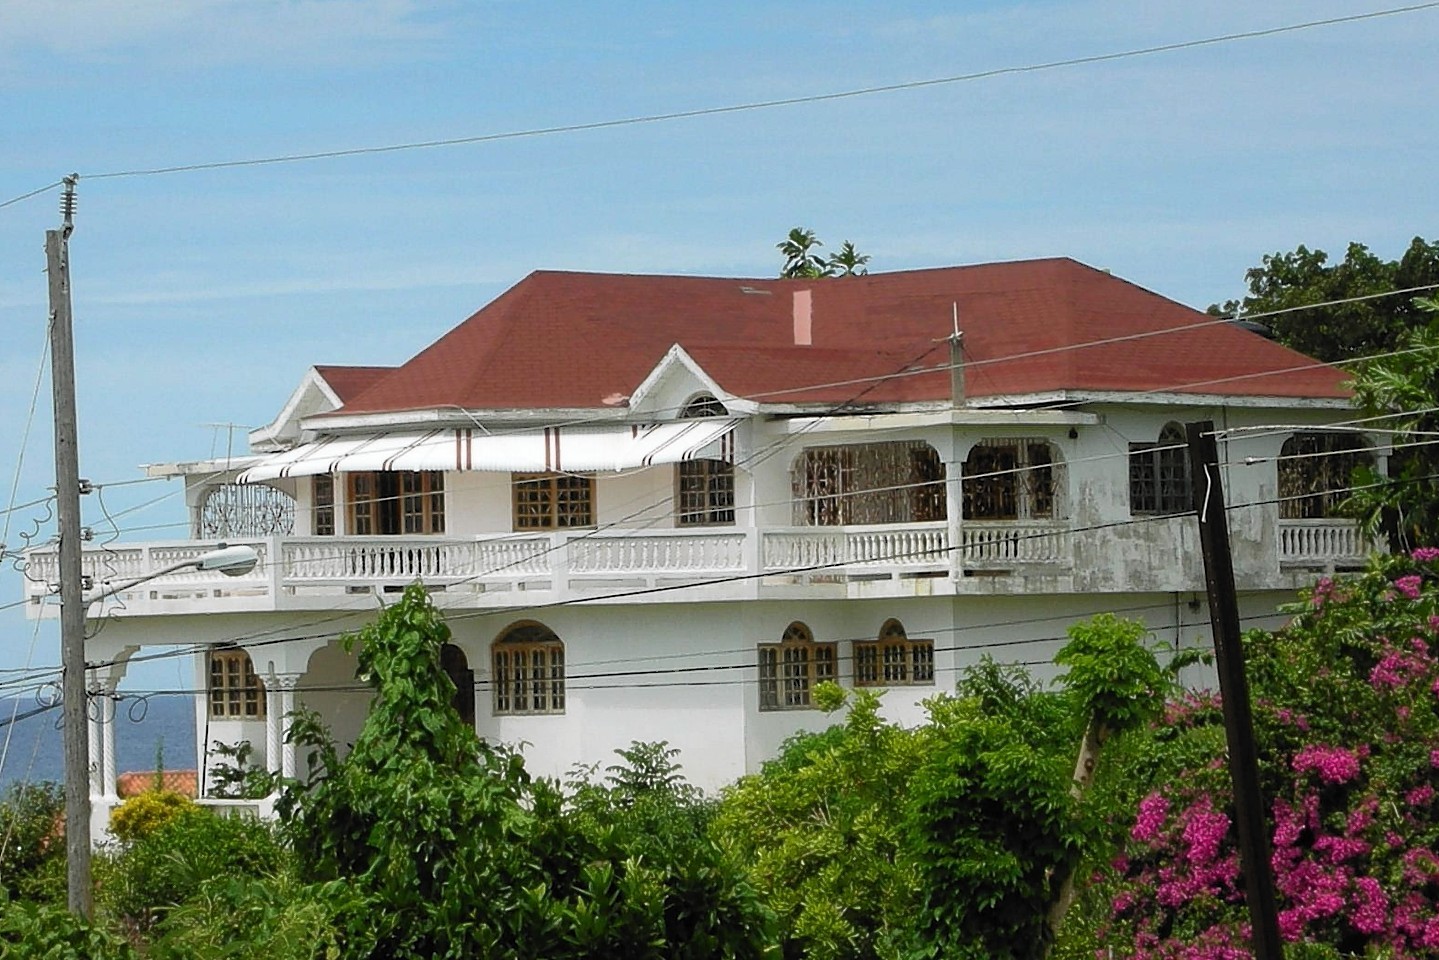 Karl Wilson's Caribbean villa